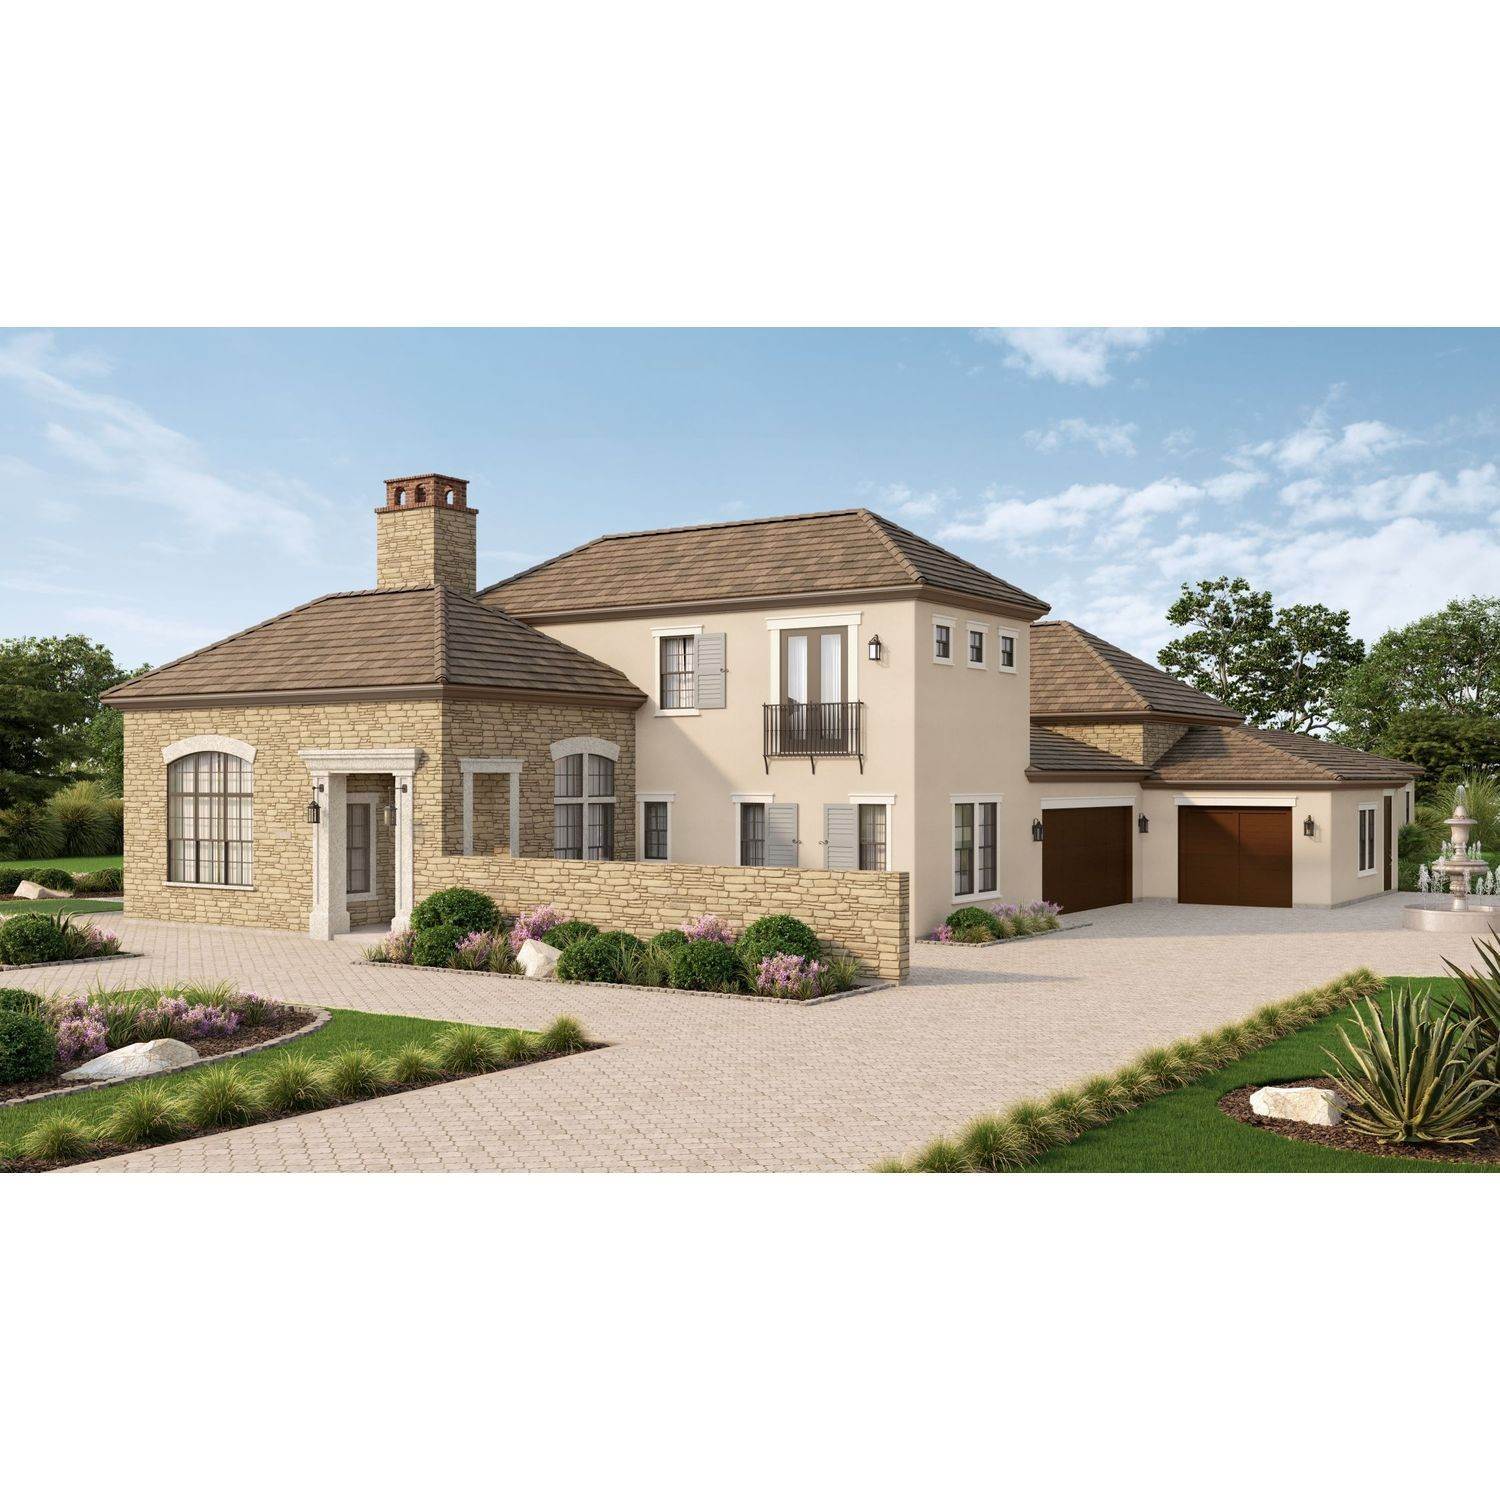 4. Single Family for Sale at Brasada Estates - Lucien 1580 Brasada Lane SAN DIMAS, CALIFORNIA 91773 UNITED STATES